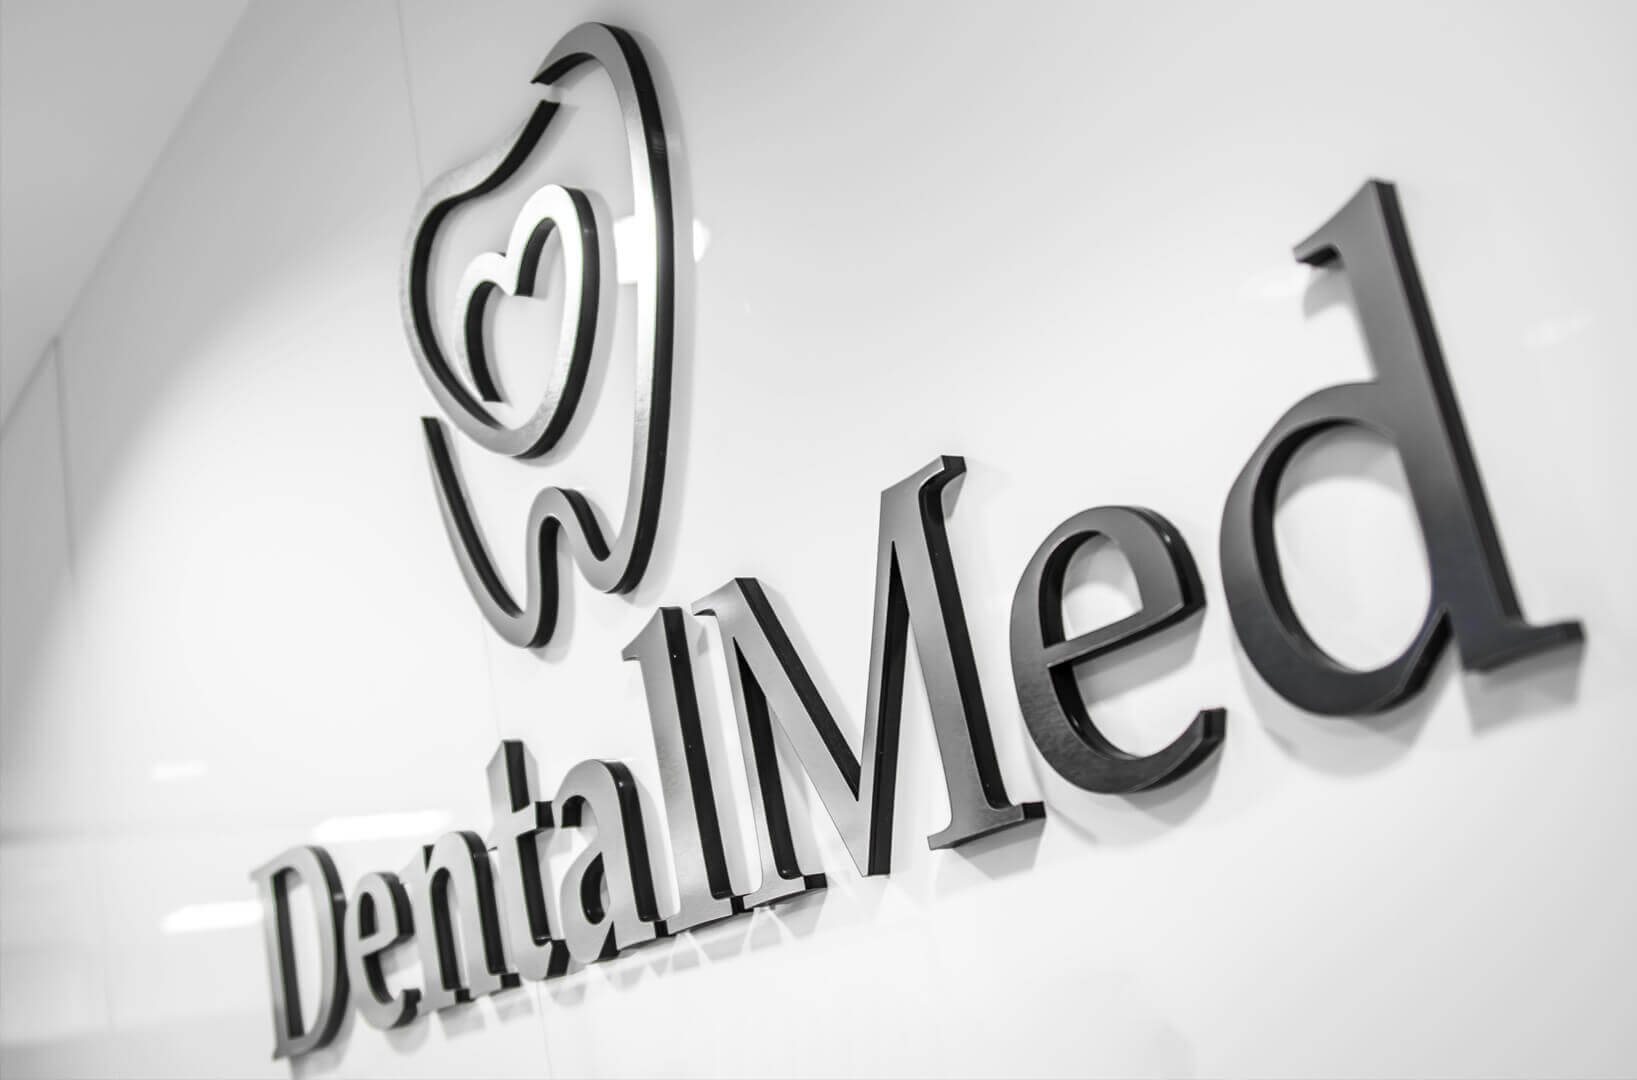 DentalMed - DentalMed - logo and 3D letters made of Plexiglass placed near the reception desk